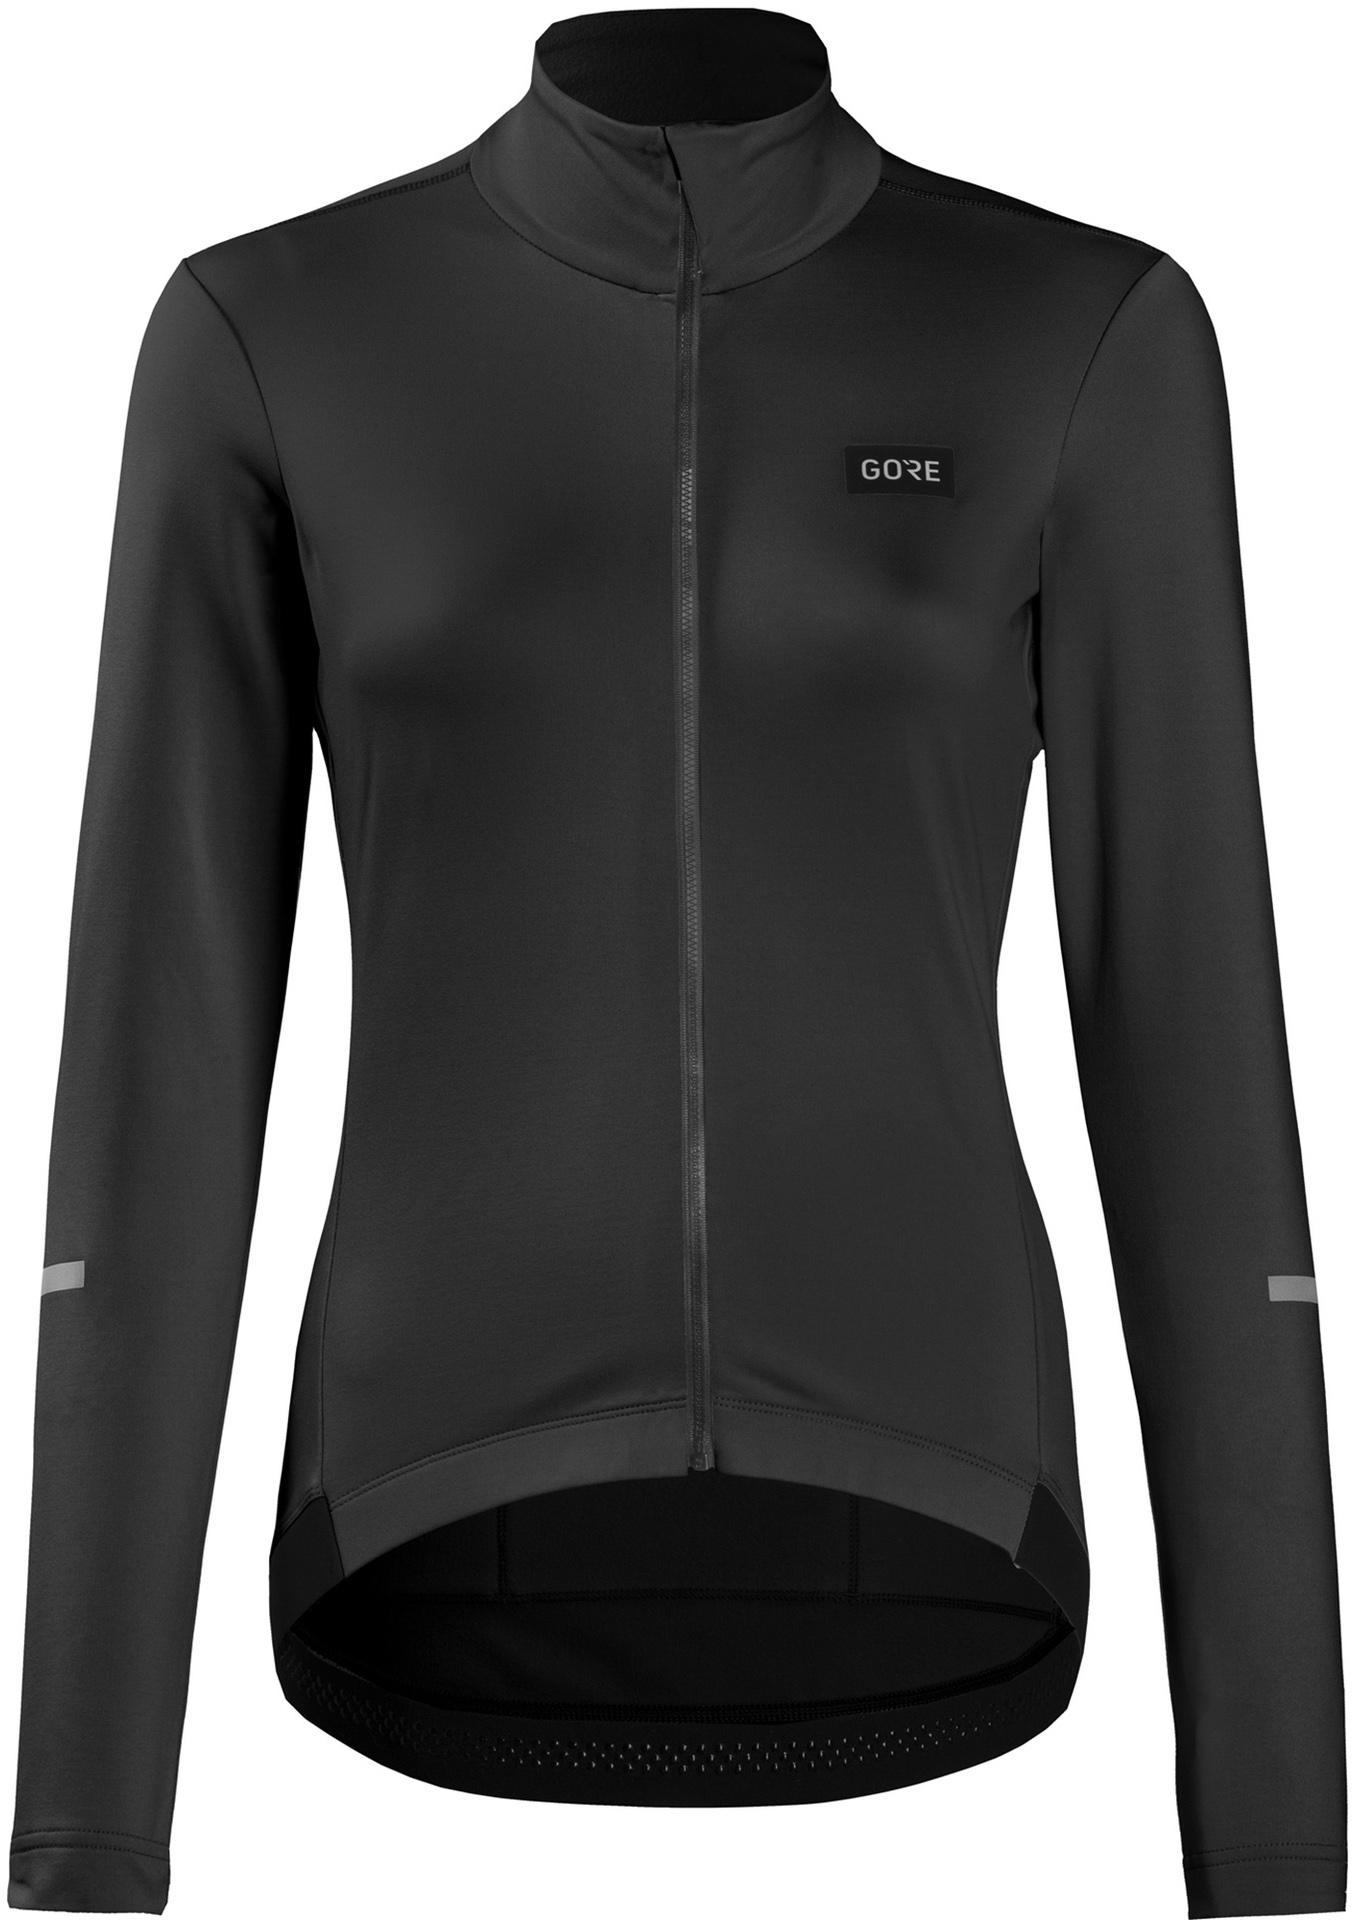 Gorewear Womens Progress Cycling Jersey  Black